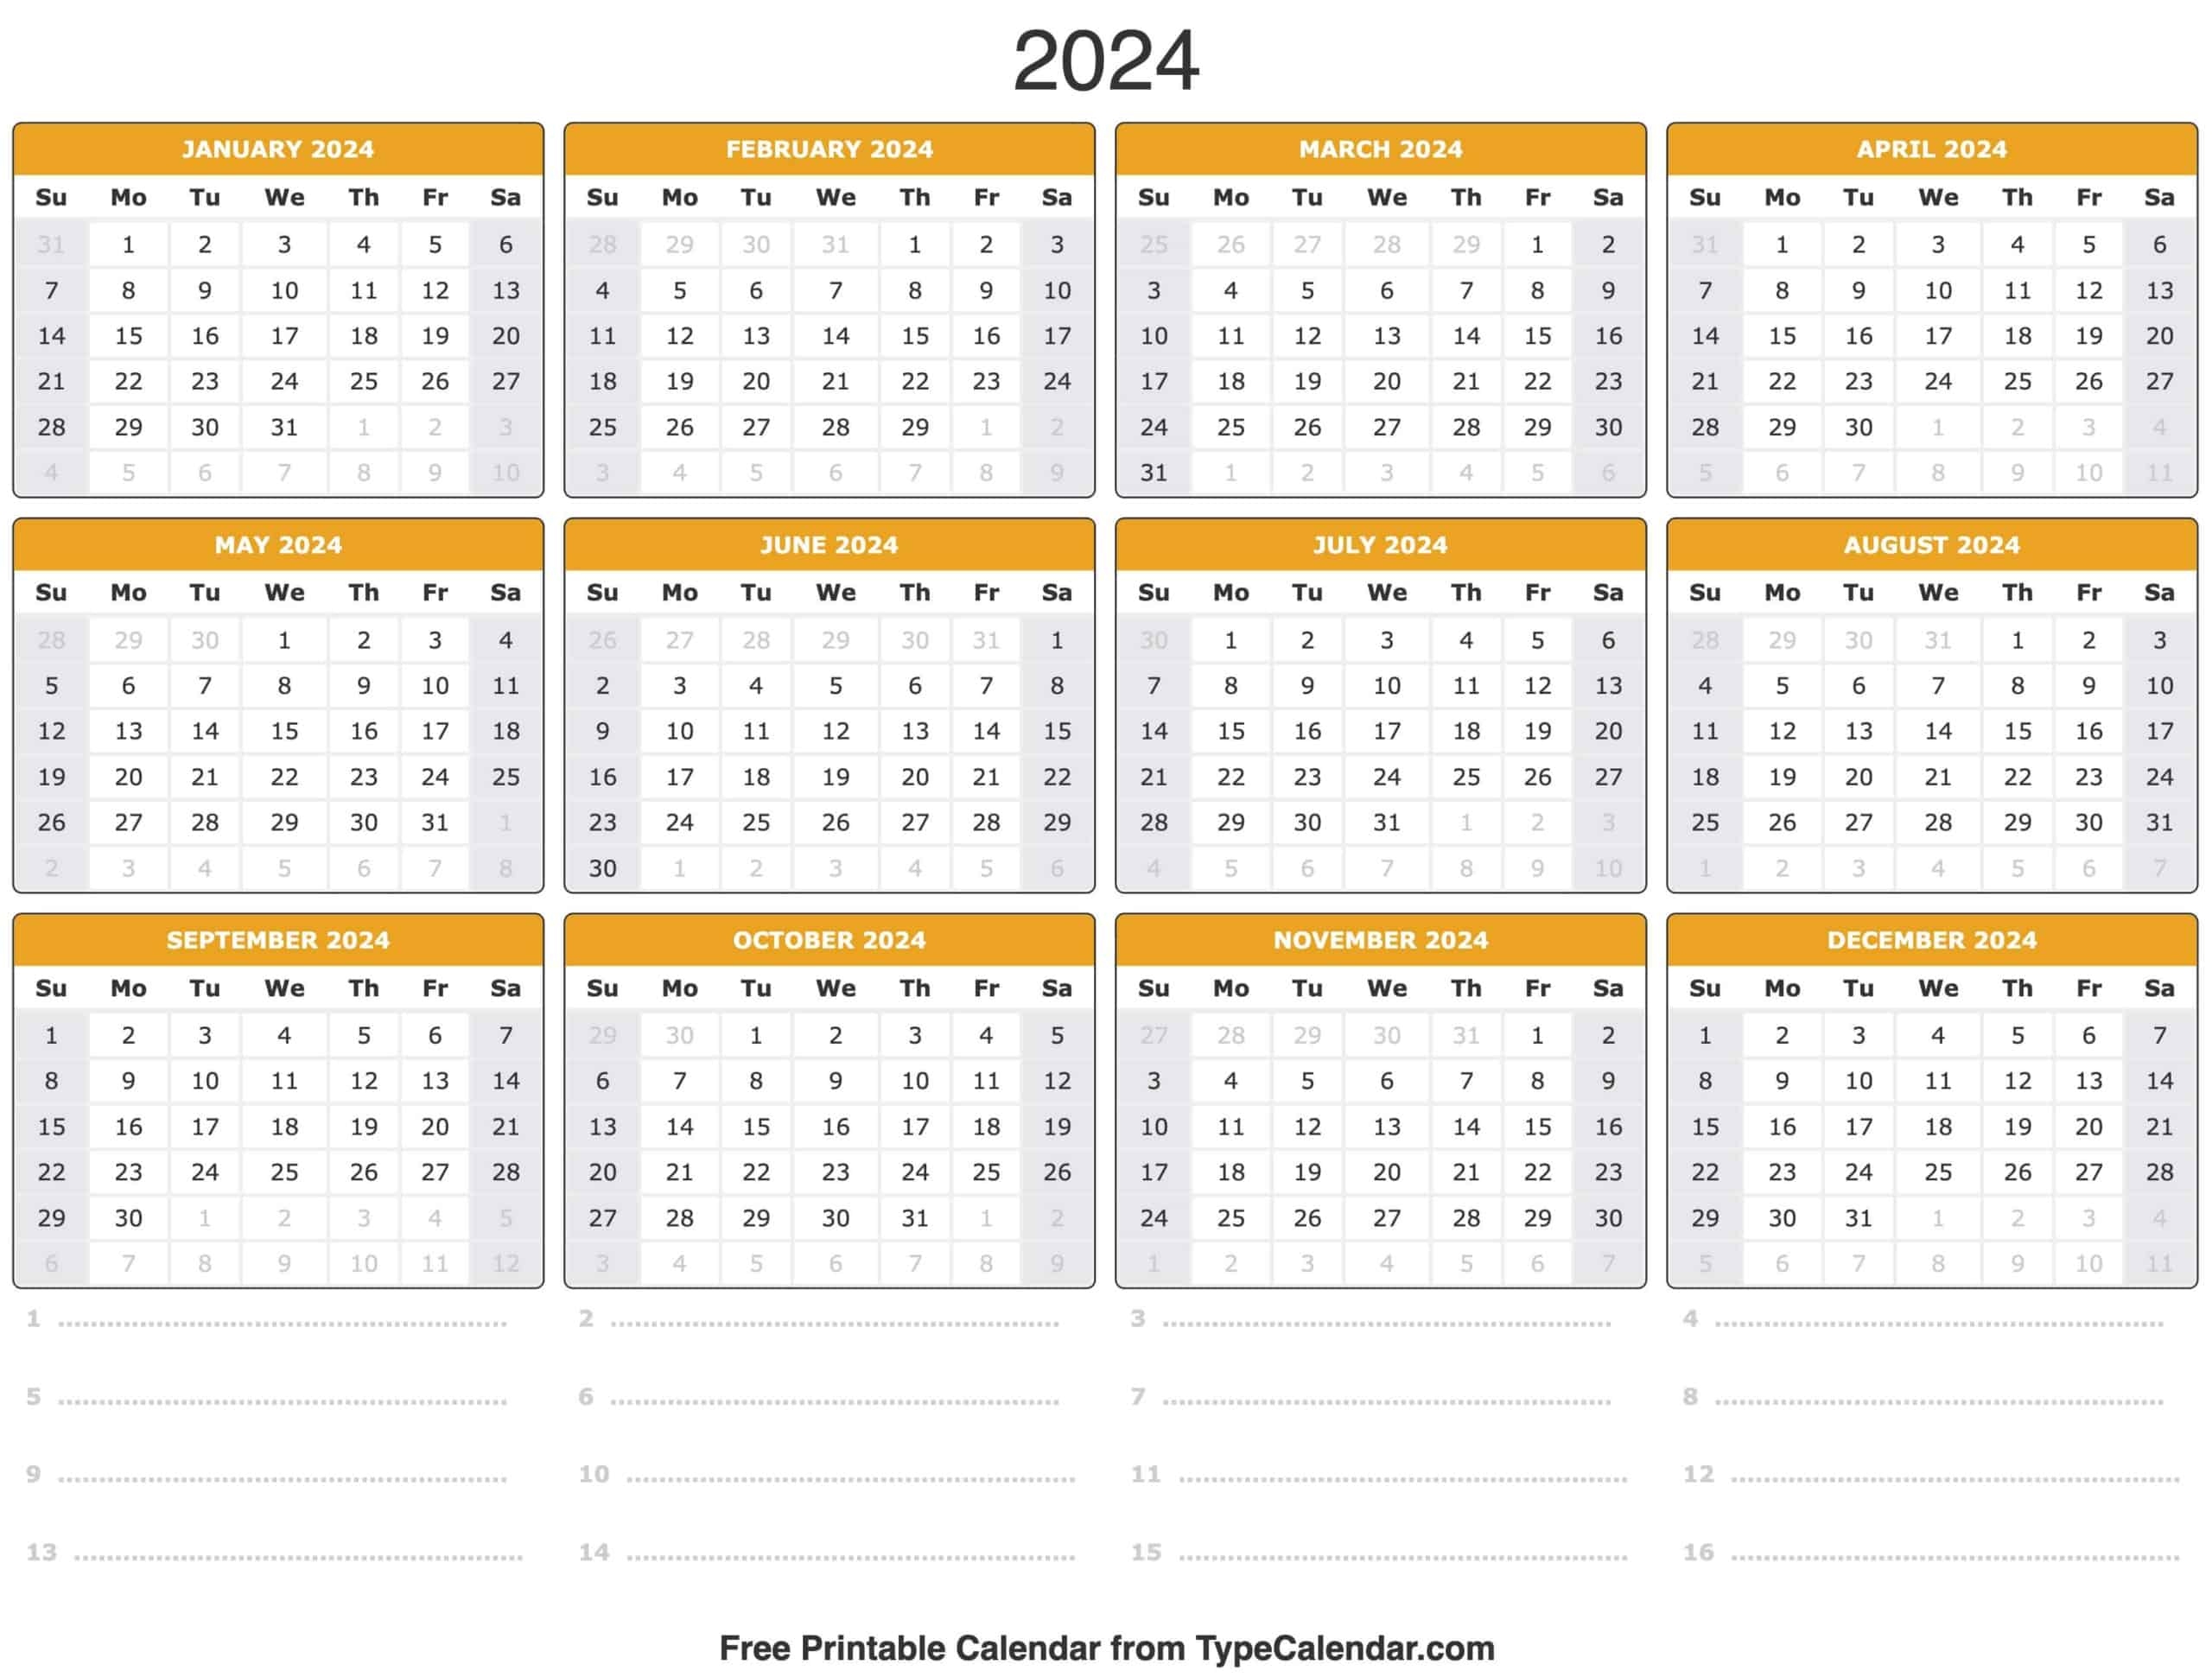 2024 Calendar: Free Printable Calendar With Holidays for Free Printable Big Bold Year 2024 Calendar